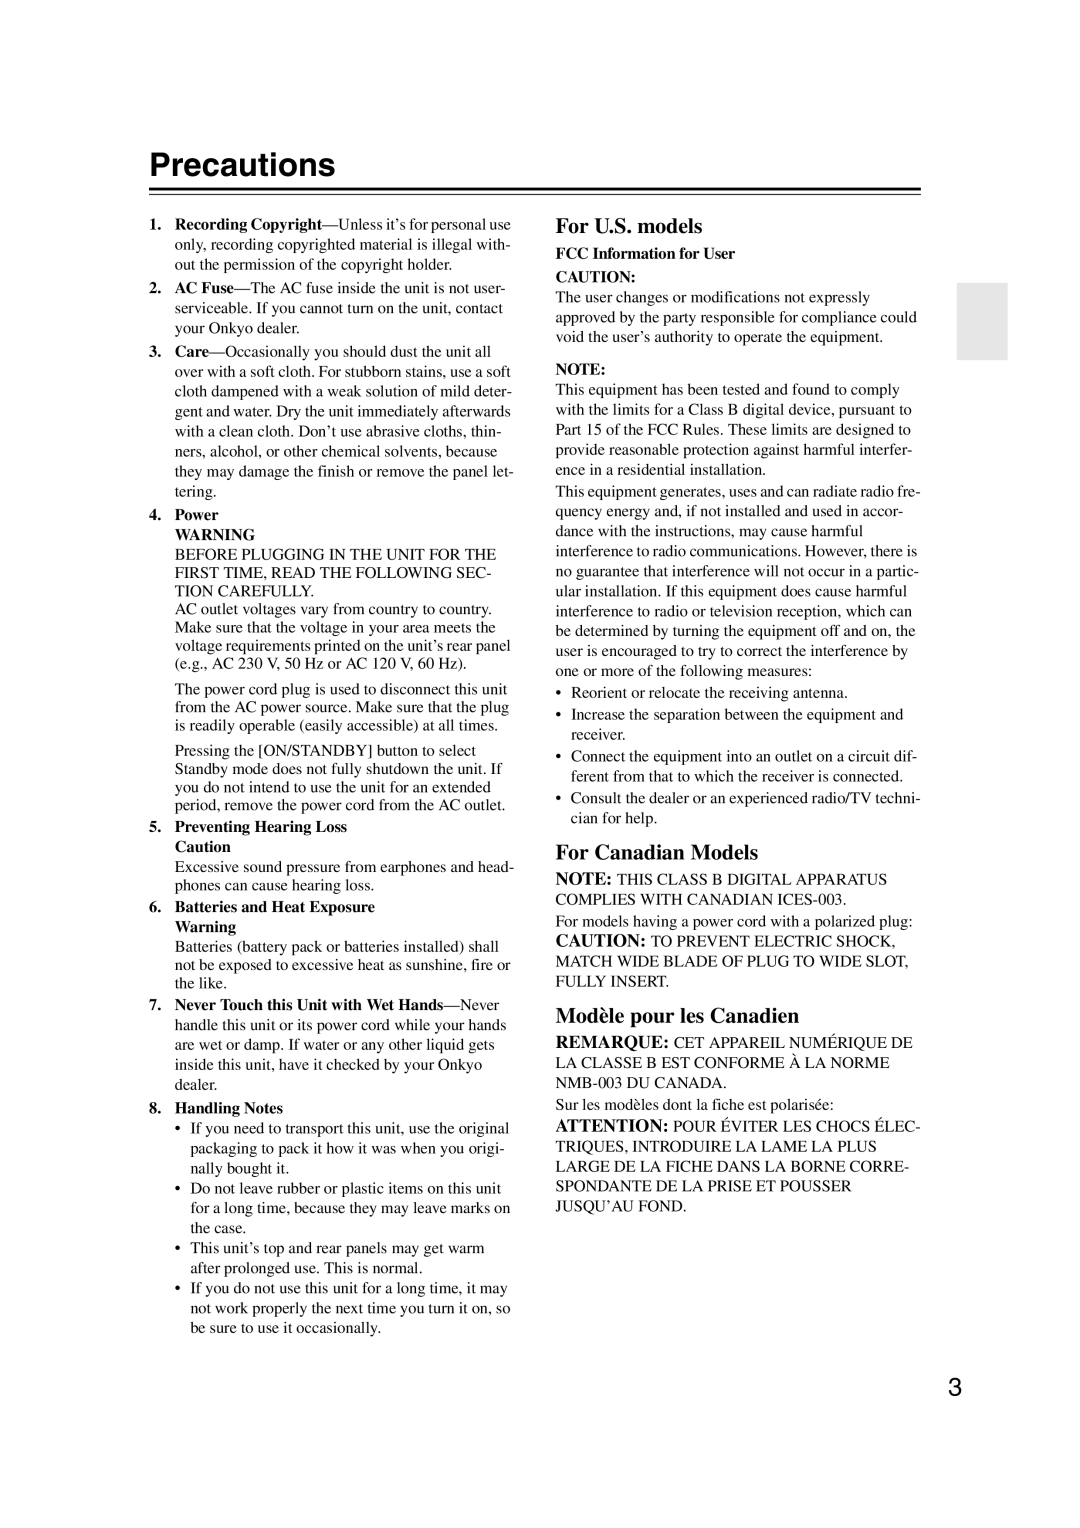 Onkyo 29400021 Precautions, For U.S. models, For Canadian Models, Modèle pour les Canadien, Power, Handling Notes 